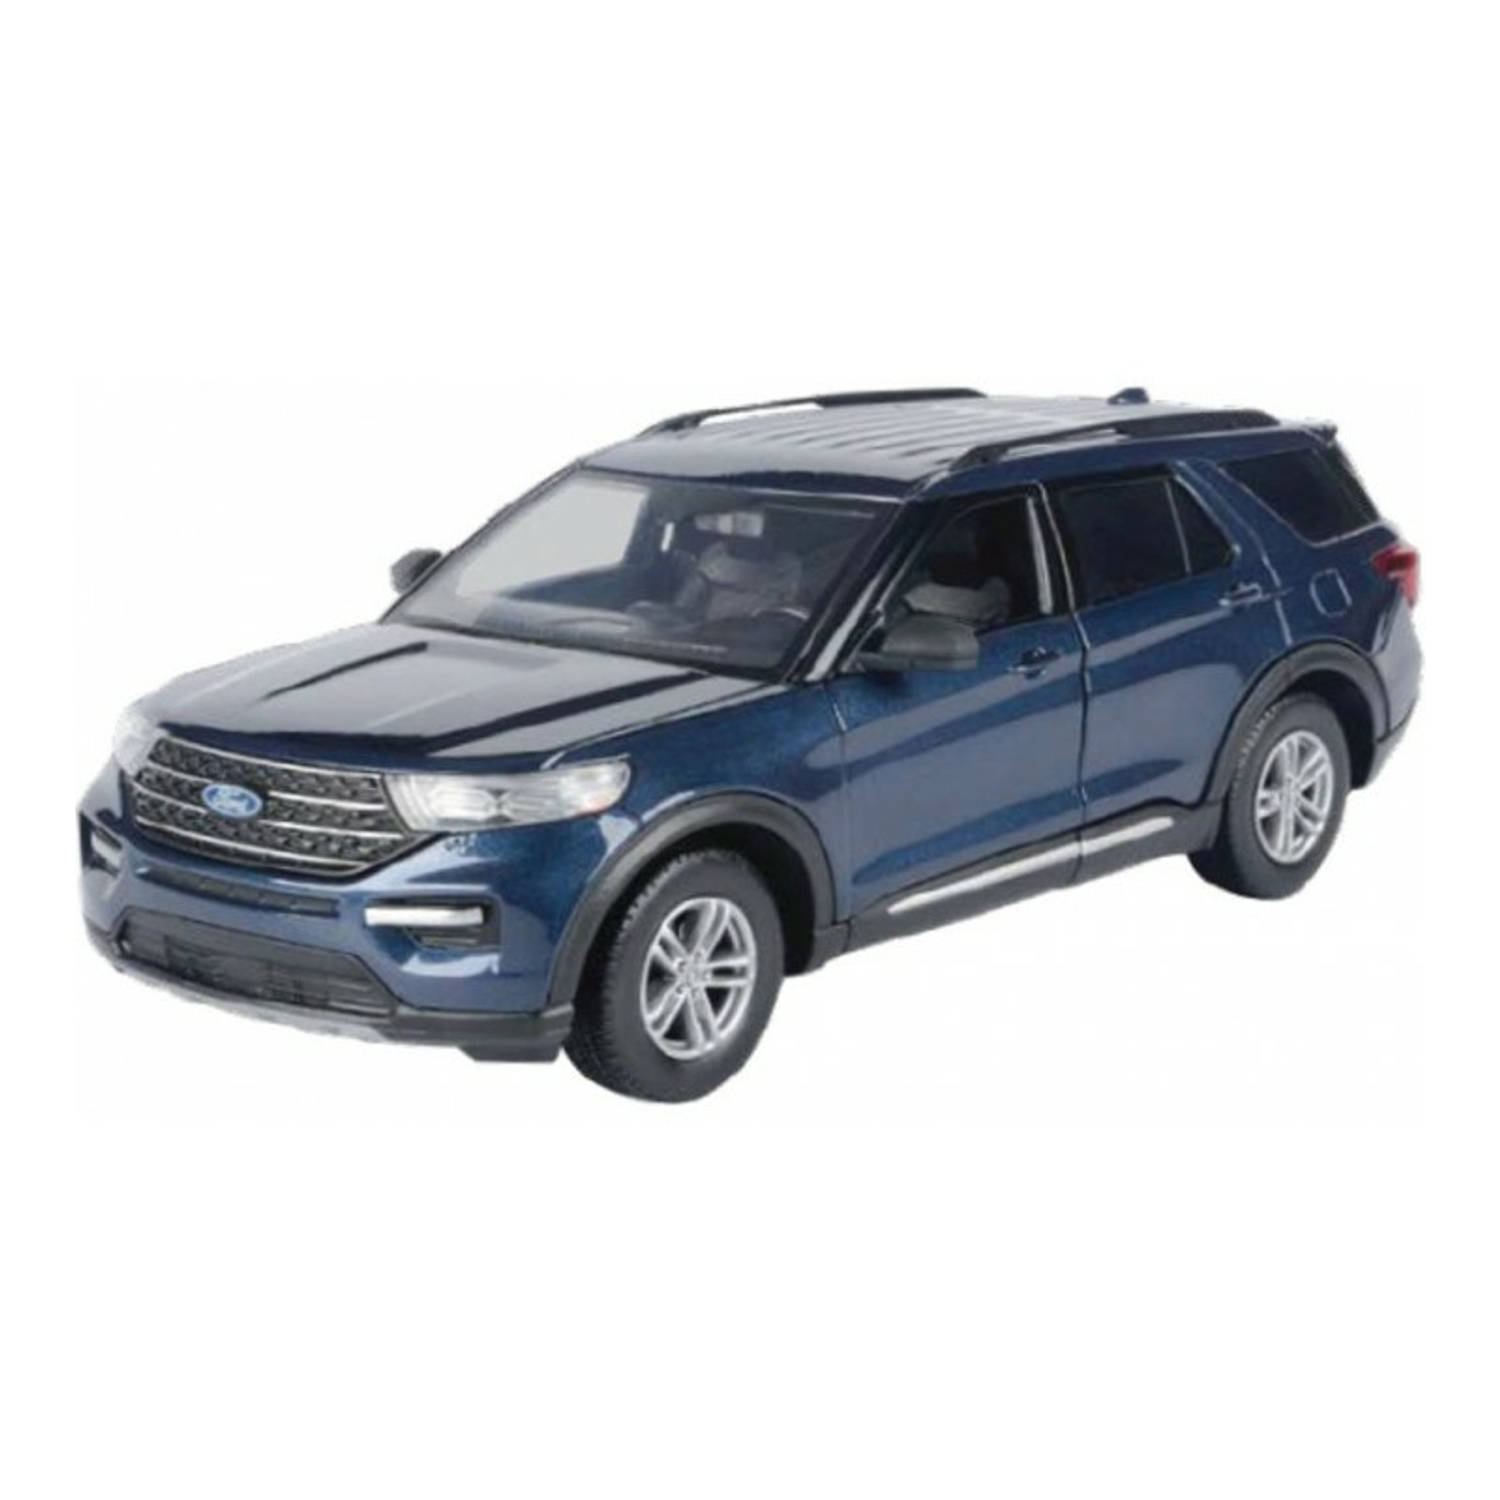 Maisto modelauto/speelgoedauto Ford Explorer XLT - blauw - schaal 1:24/21 x 8 x 7 cm